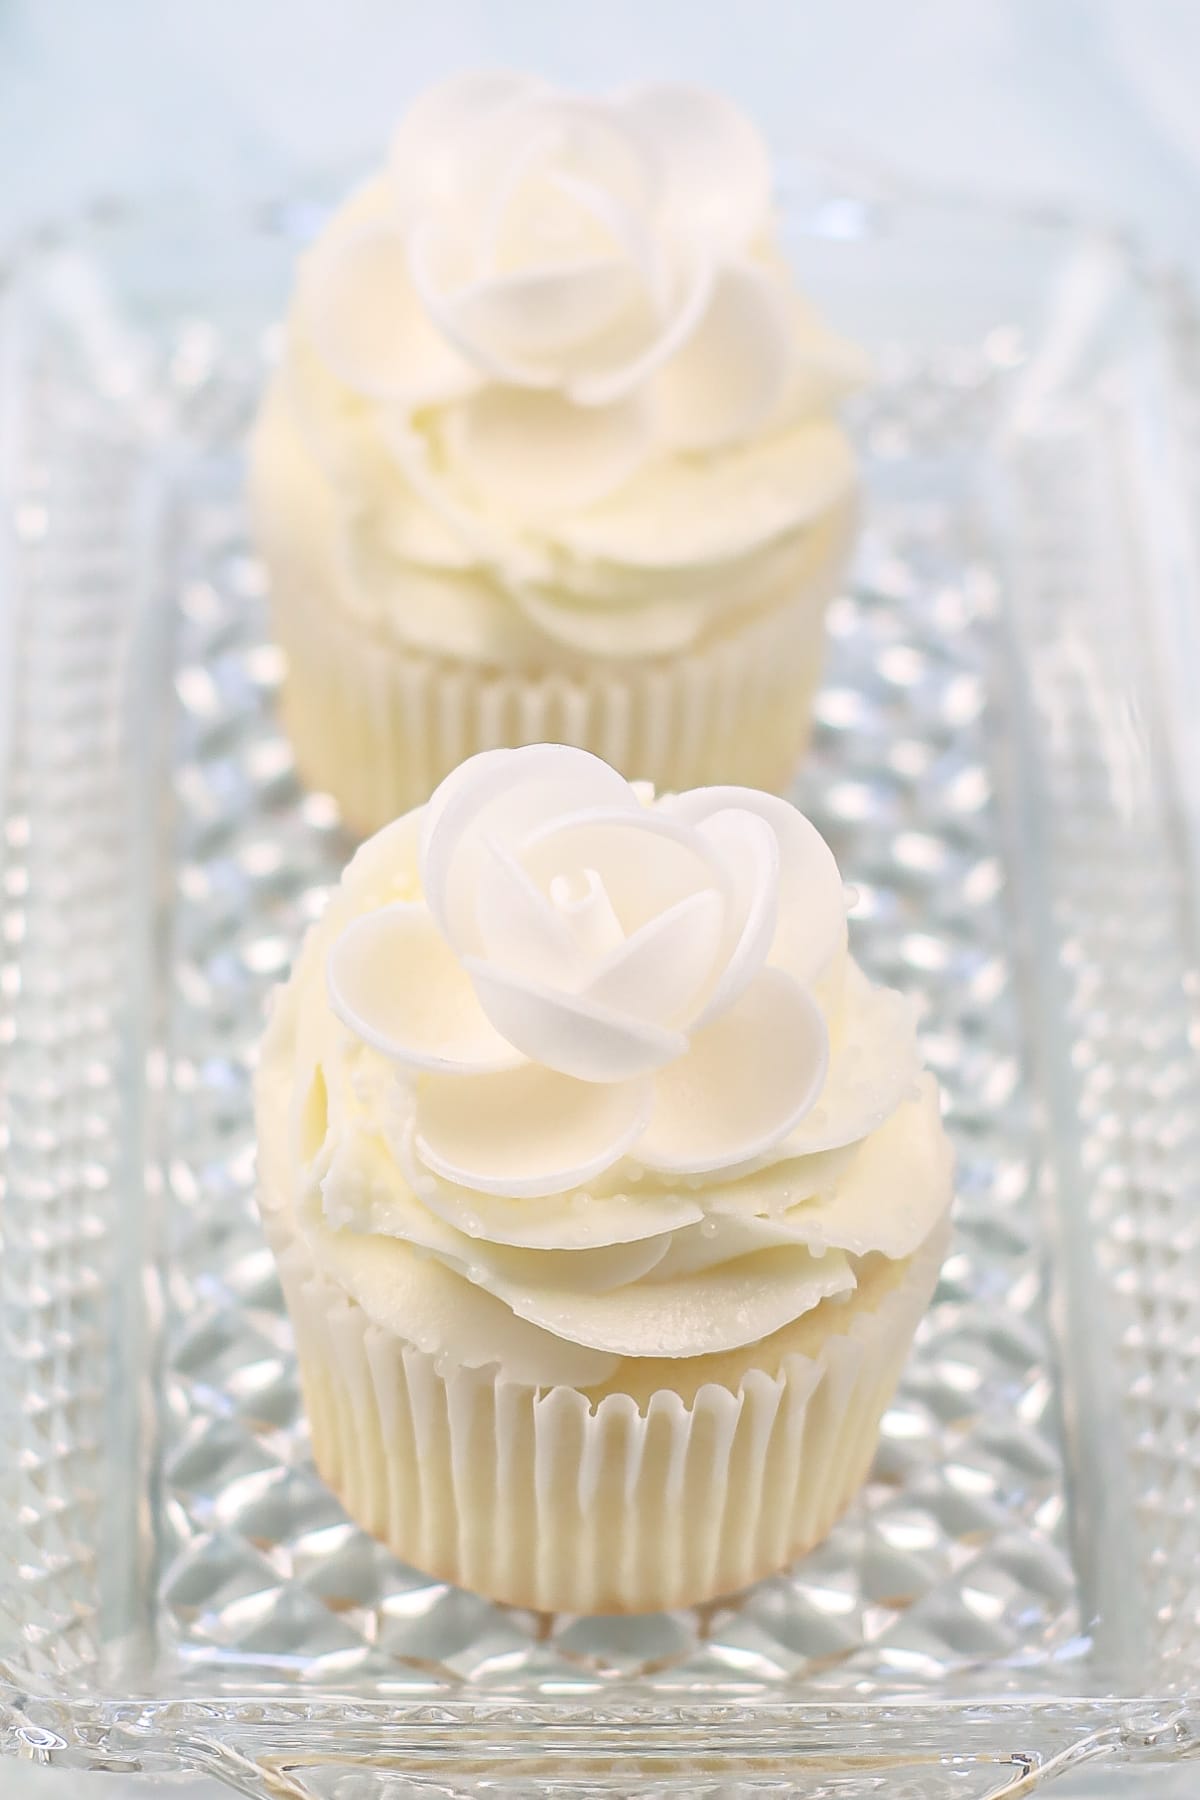 White cupcakes on glass platter